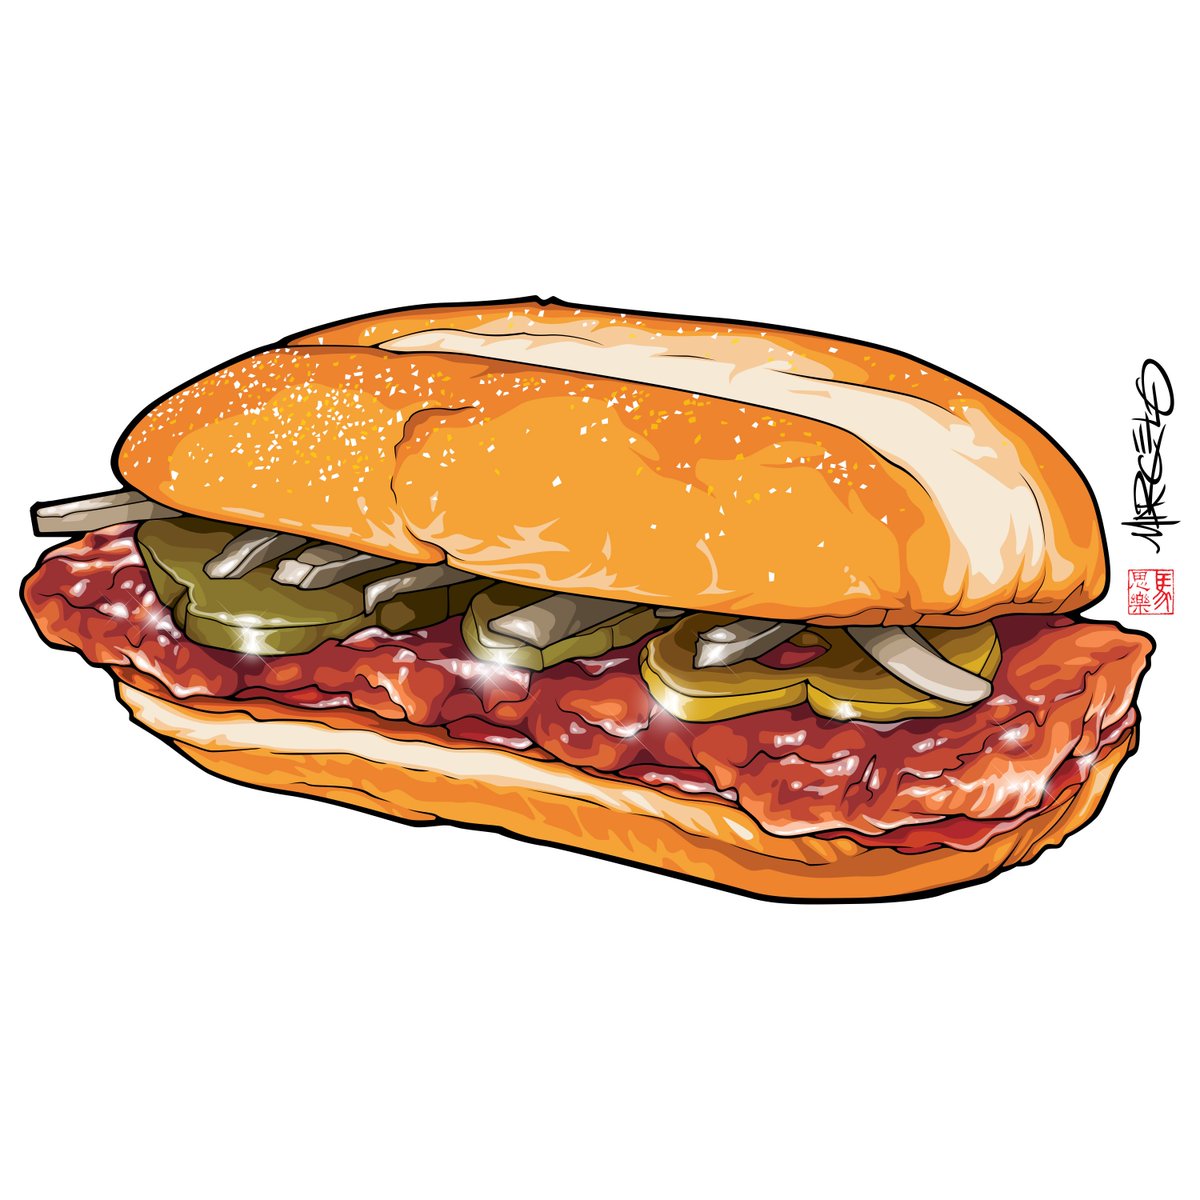 McDonald's McRib Sandwich art